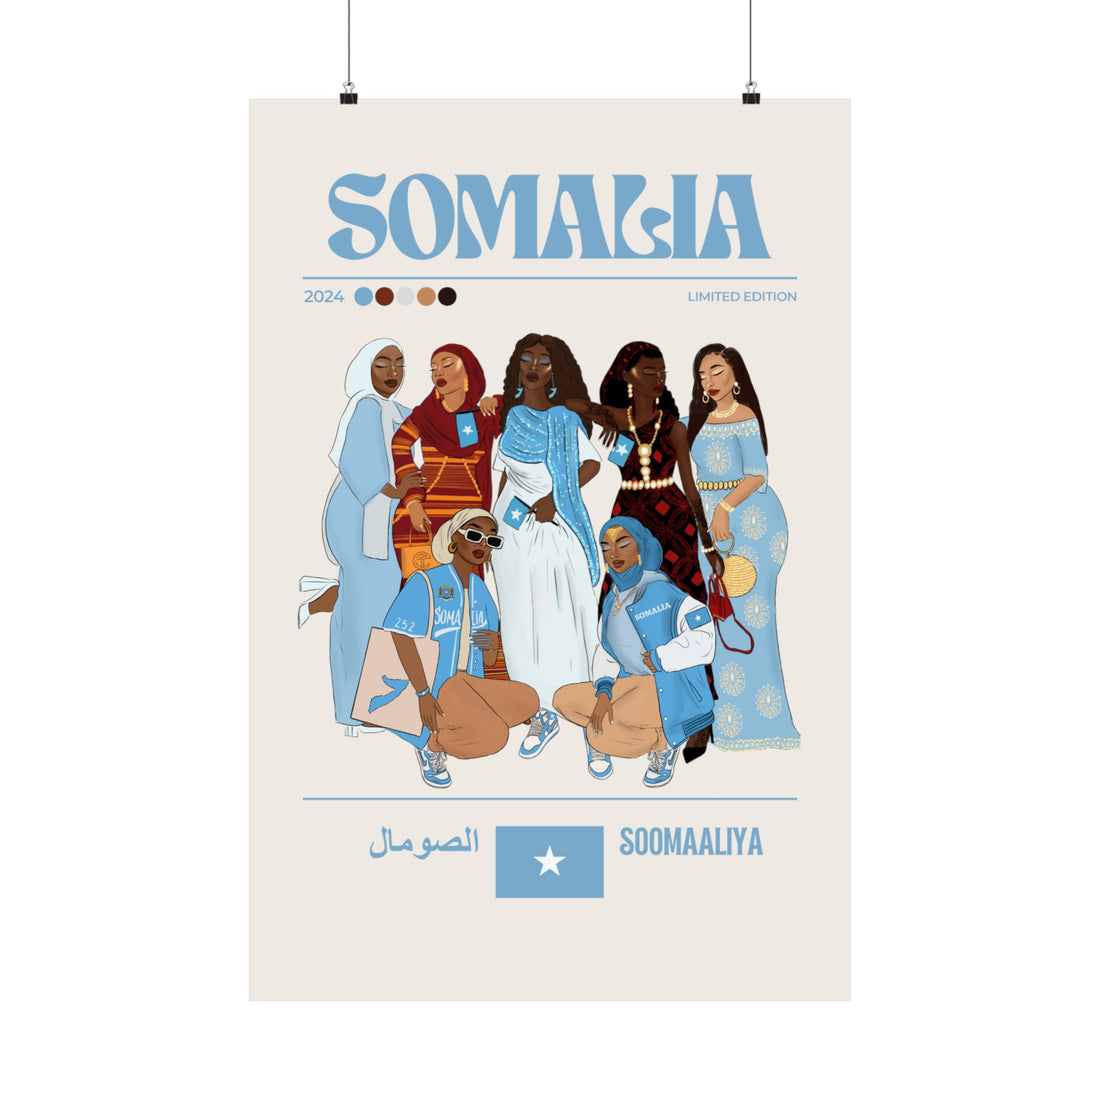 Somalia x Streetwear - Matte Vertical Posters